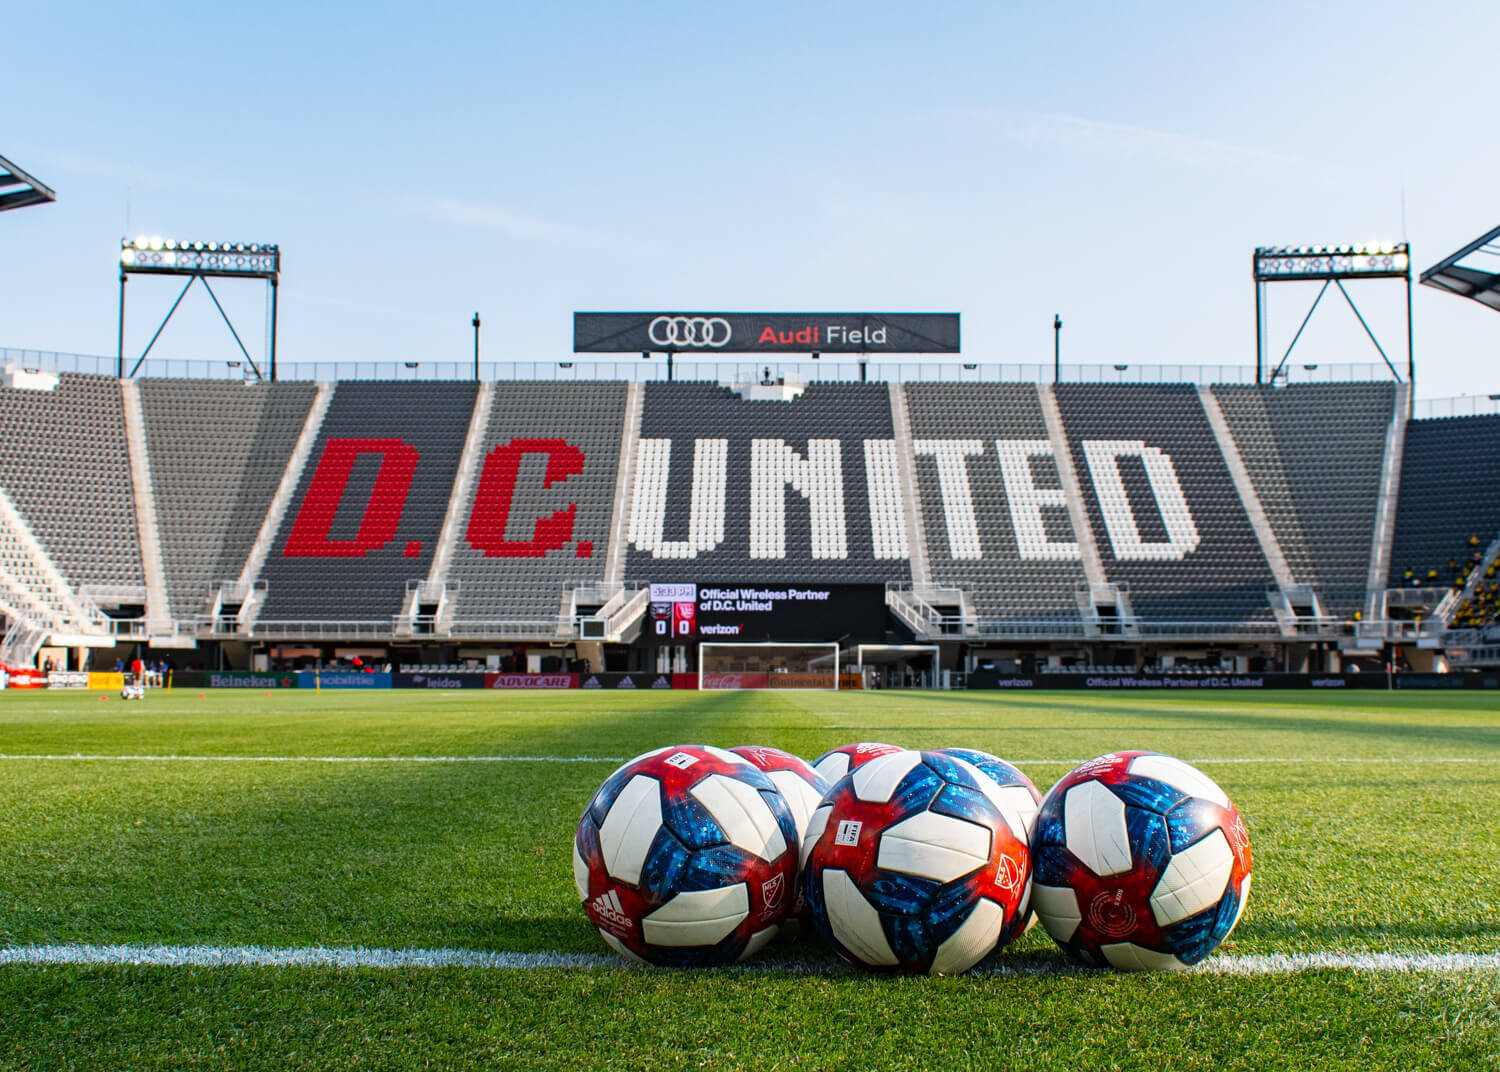 Audi-Field-Pitch-Matchball-2019-Washington-DC-United-MLS-Soccer-Stadium-crvnka-Photography-14.JPG